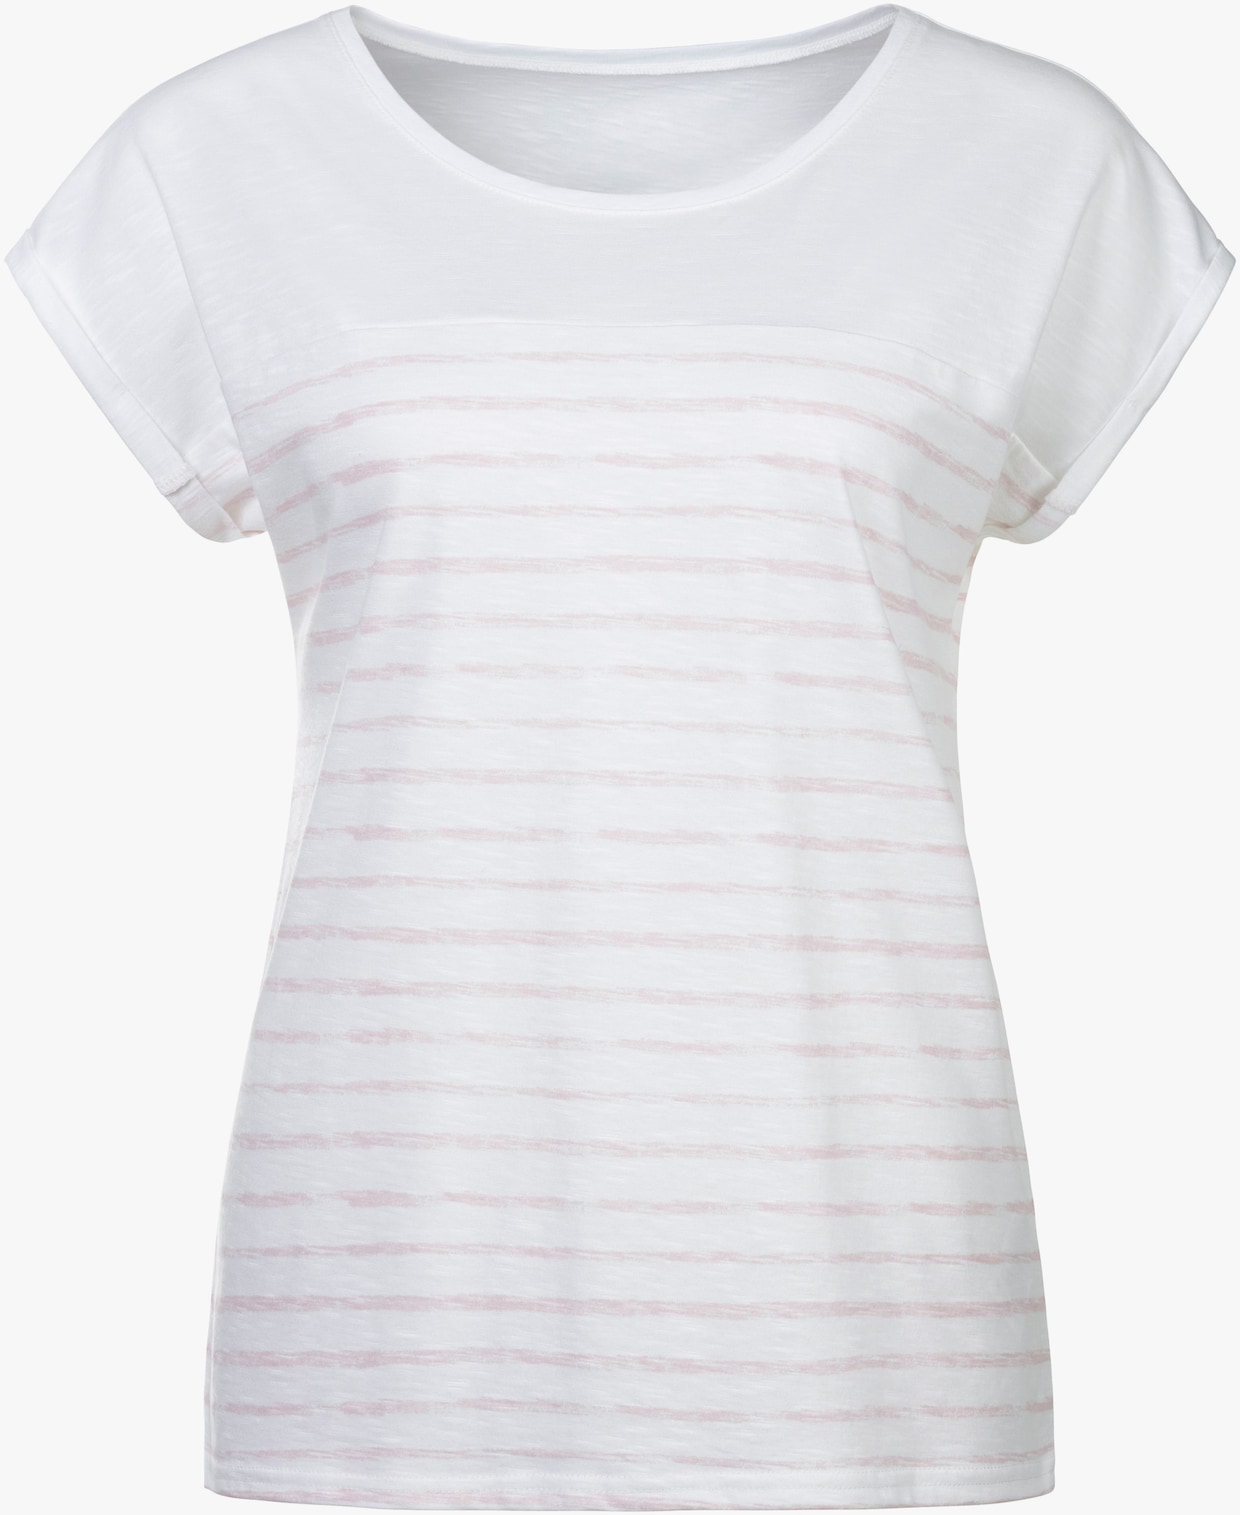 Beachtime T-shirt - wit/marine, wit/roze